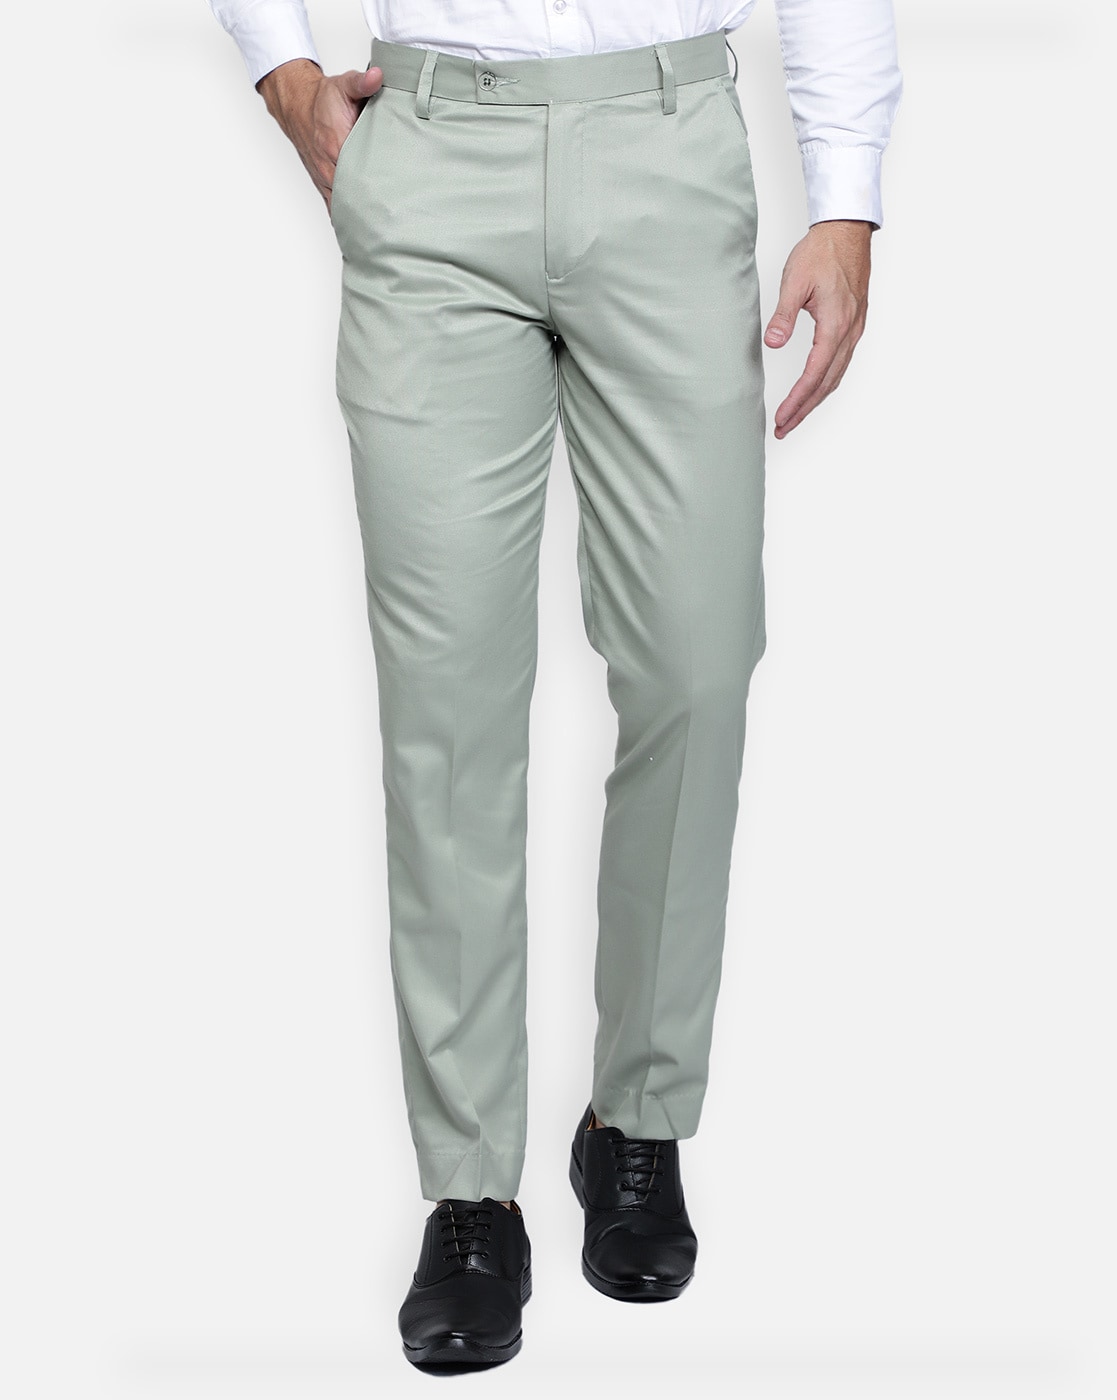 Buy D novo Men's Regular fit Formal Trouser (28, Army Green) at Amazon.in